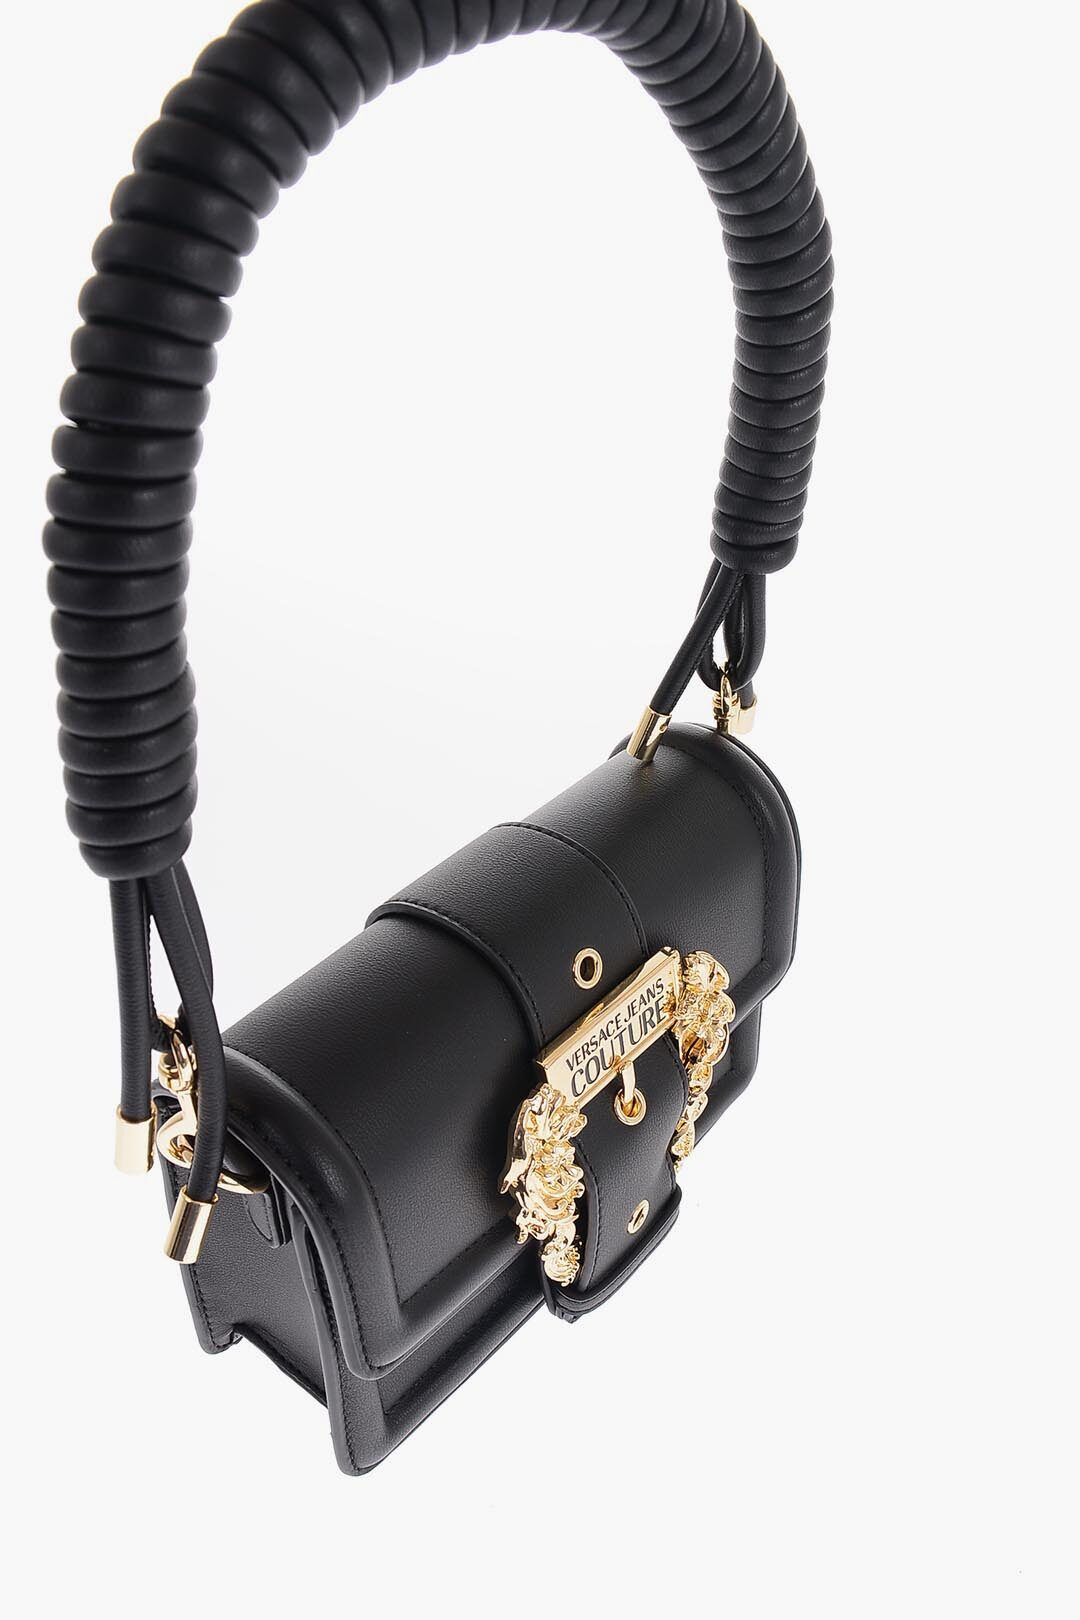 Versace Jeans Couture Heart Lock Crossbody Bag - Farfetch